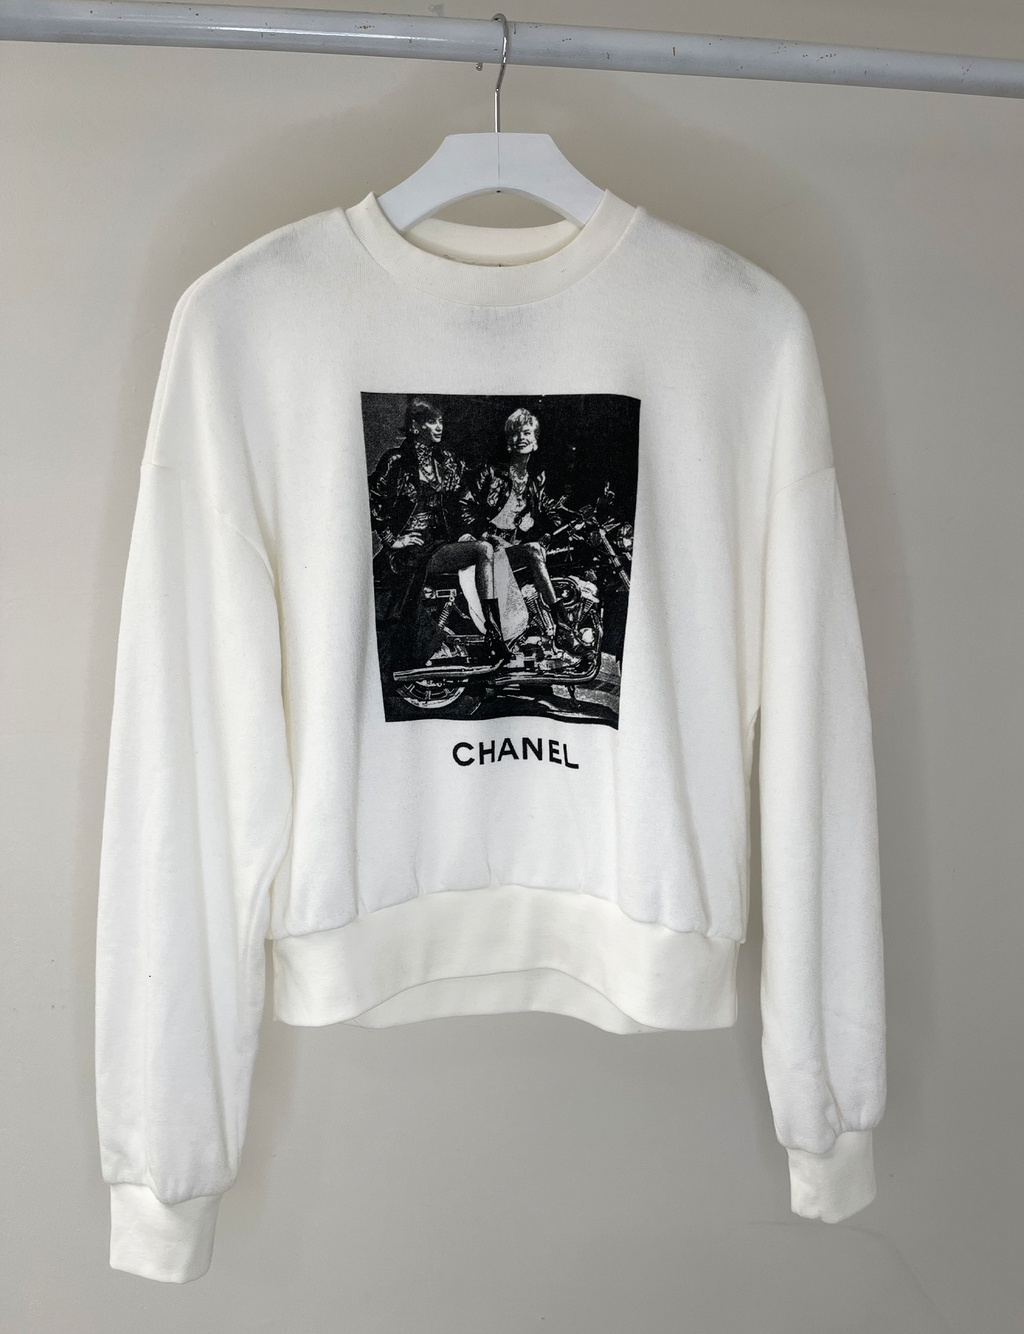 Chanel Graphic Motto Vintage Sweatshirt, White